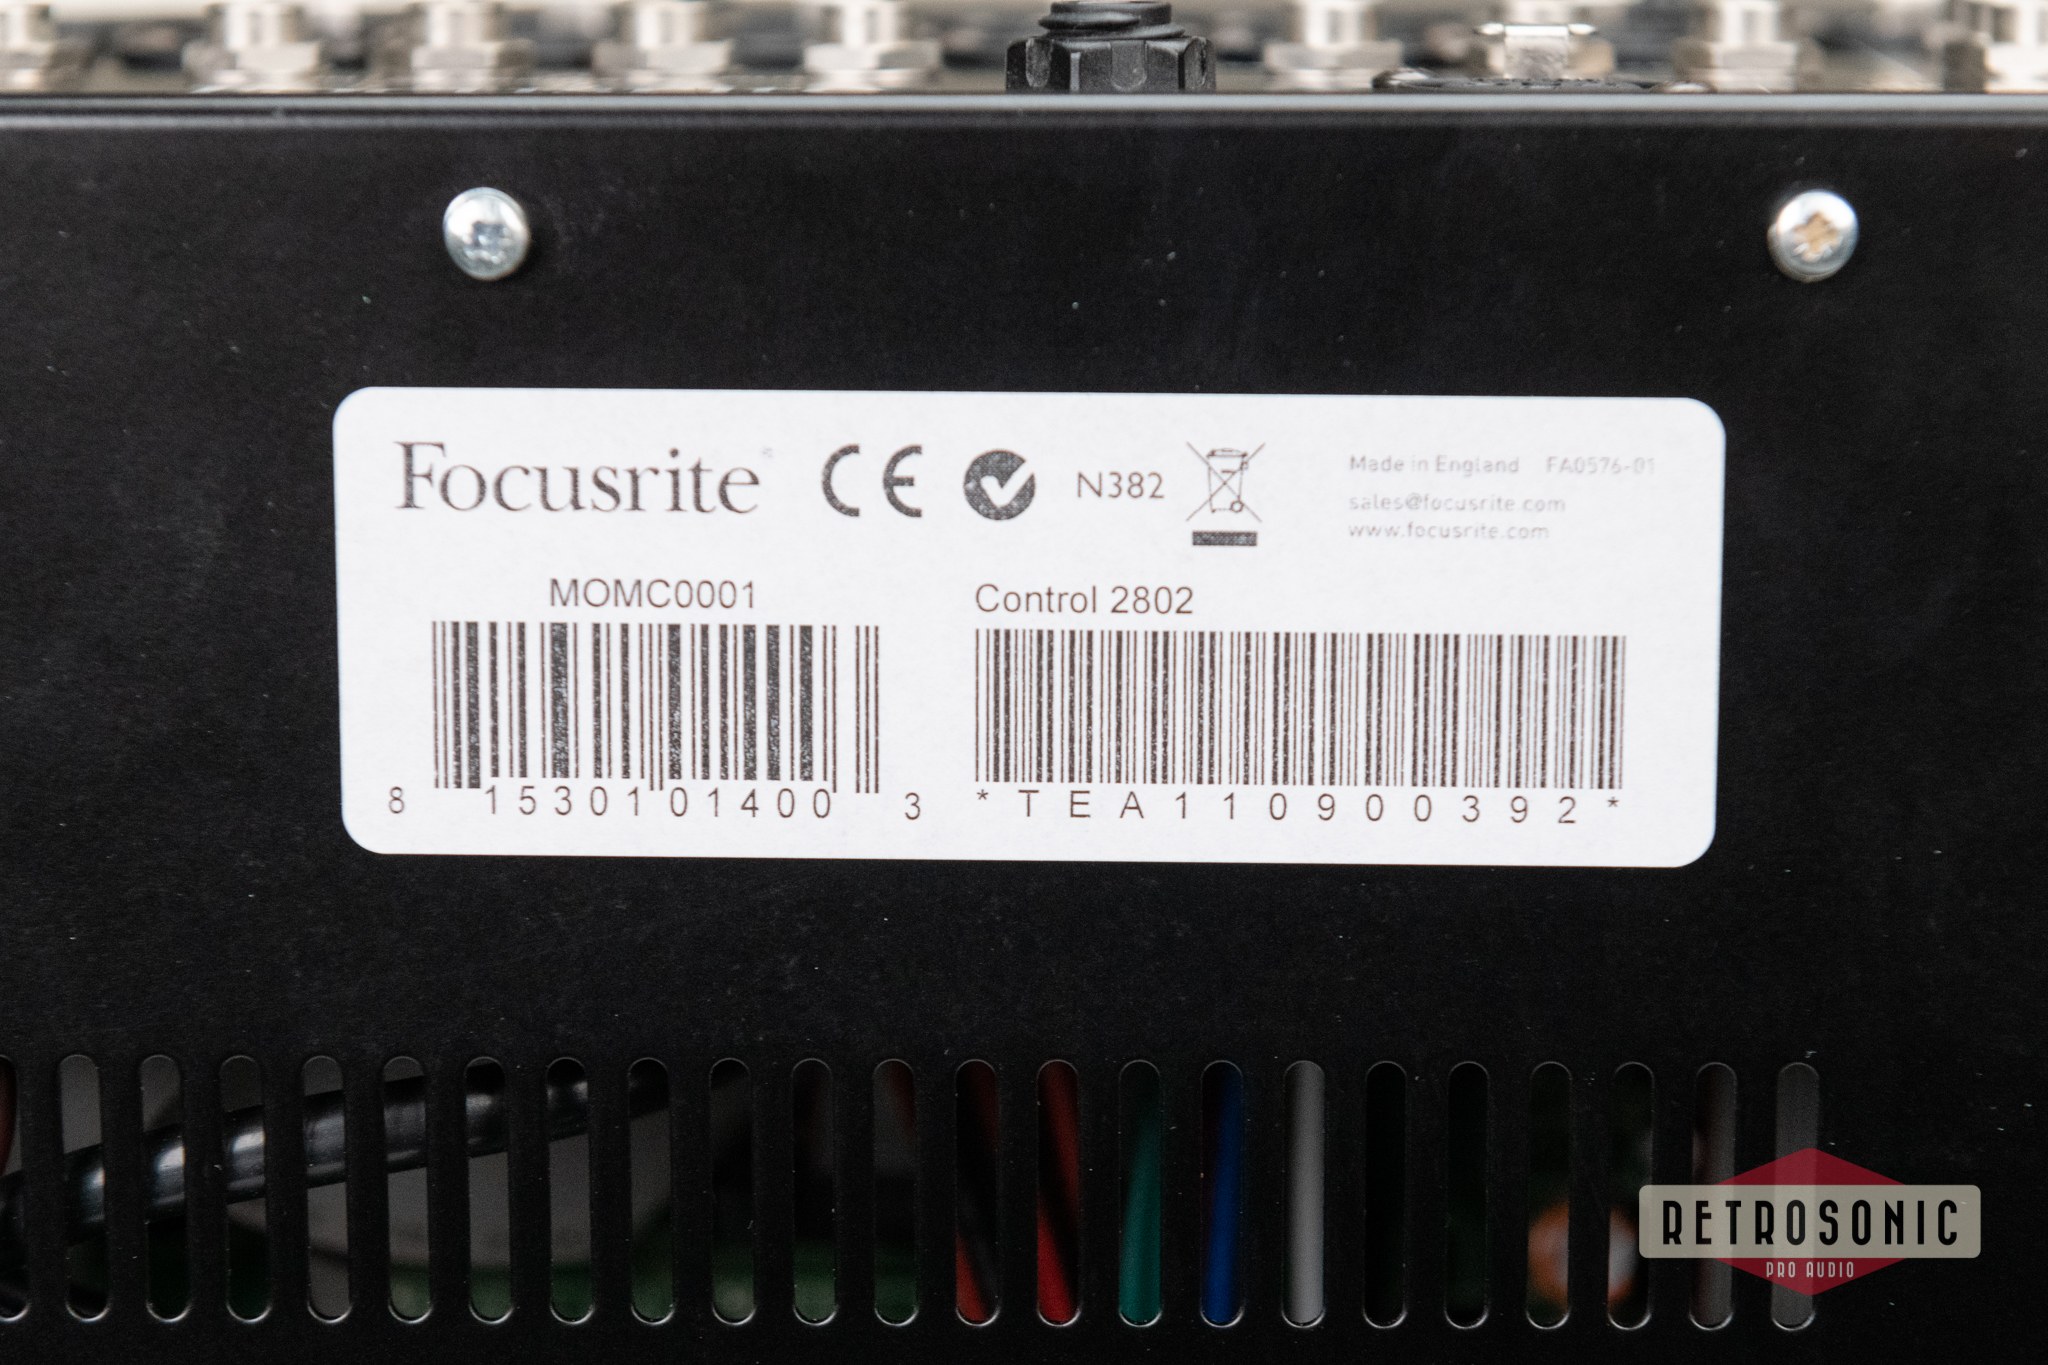 Focusrite Control 2802 Analogue Console & DAW Controller